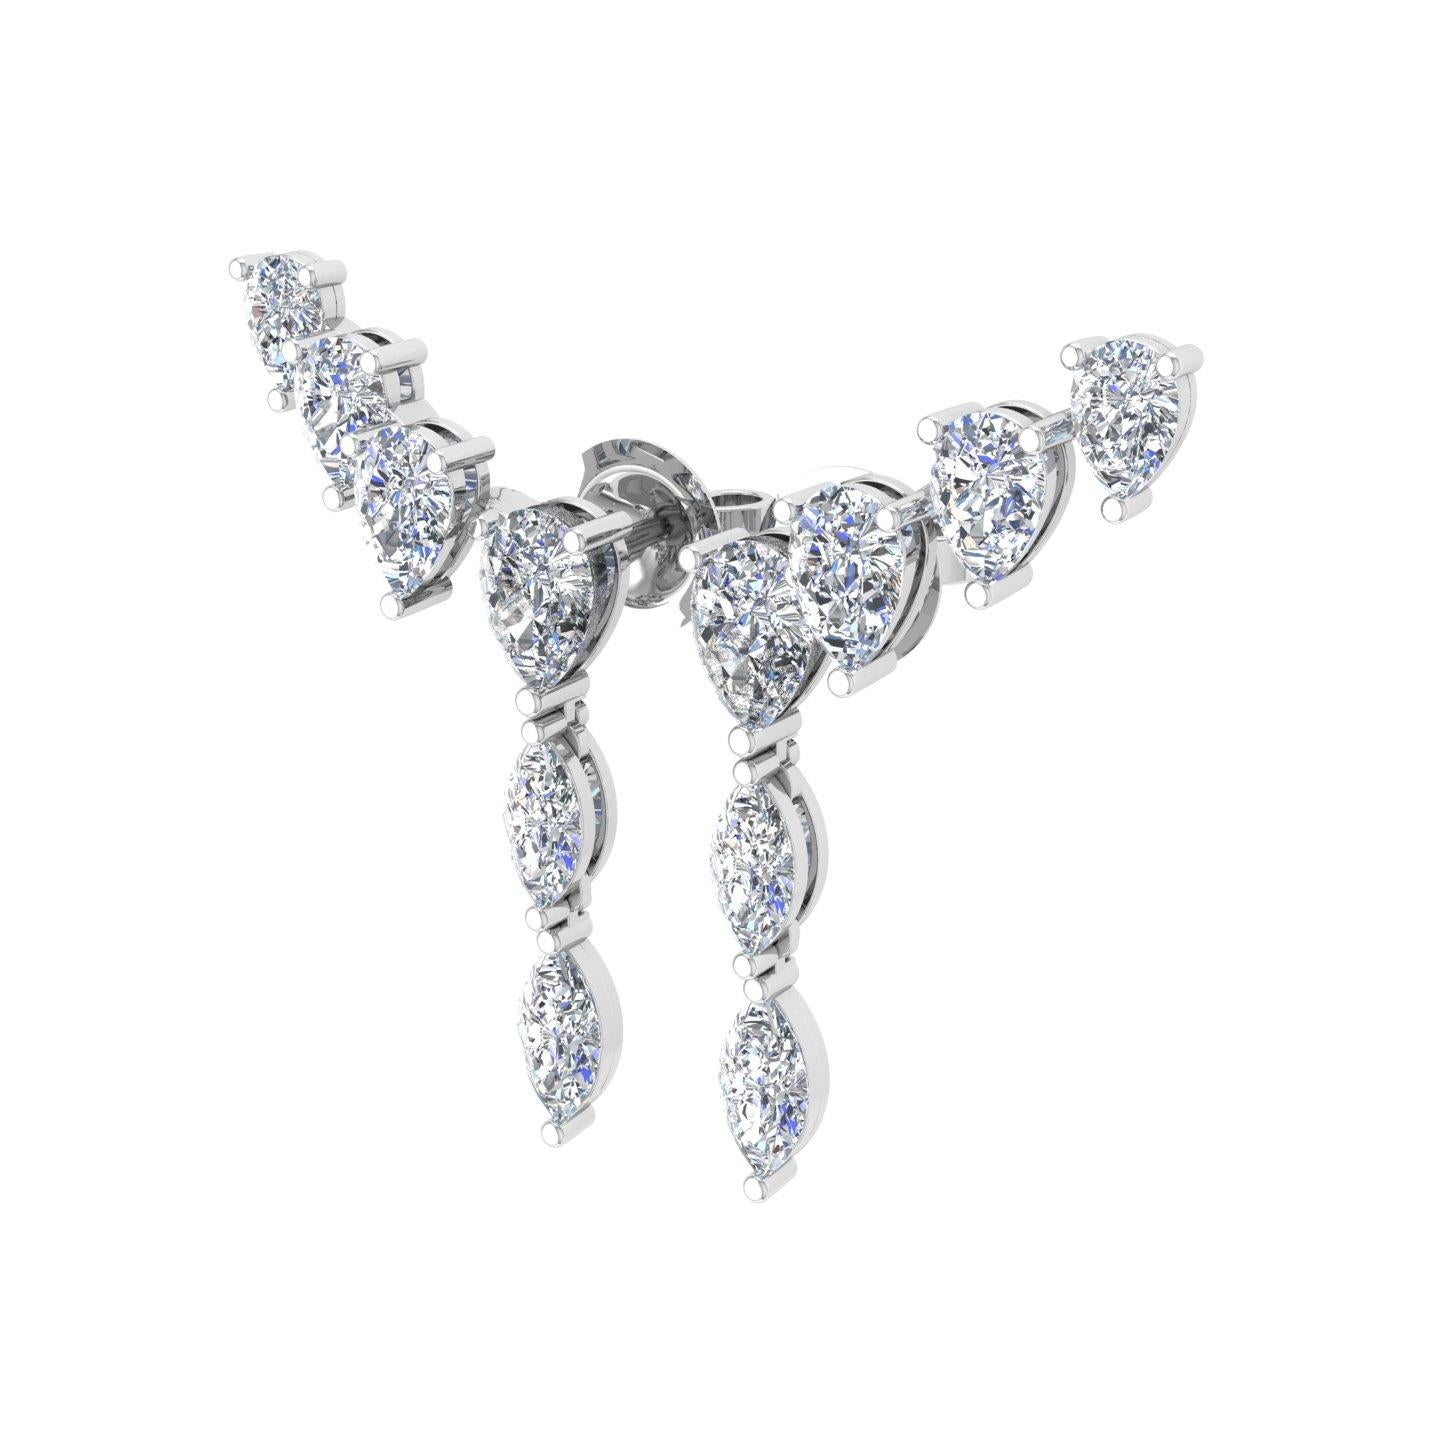 0.90 Carat Pear & Marquise Diamond Earrings 18 Karat White Gold Handmade Jewelry For Sale 3